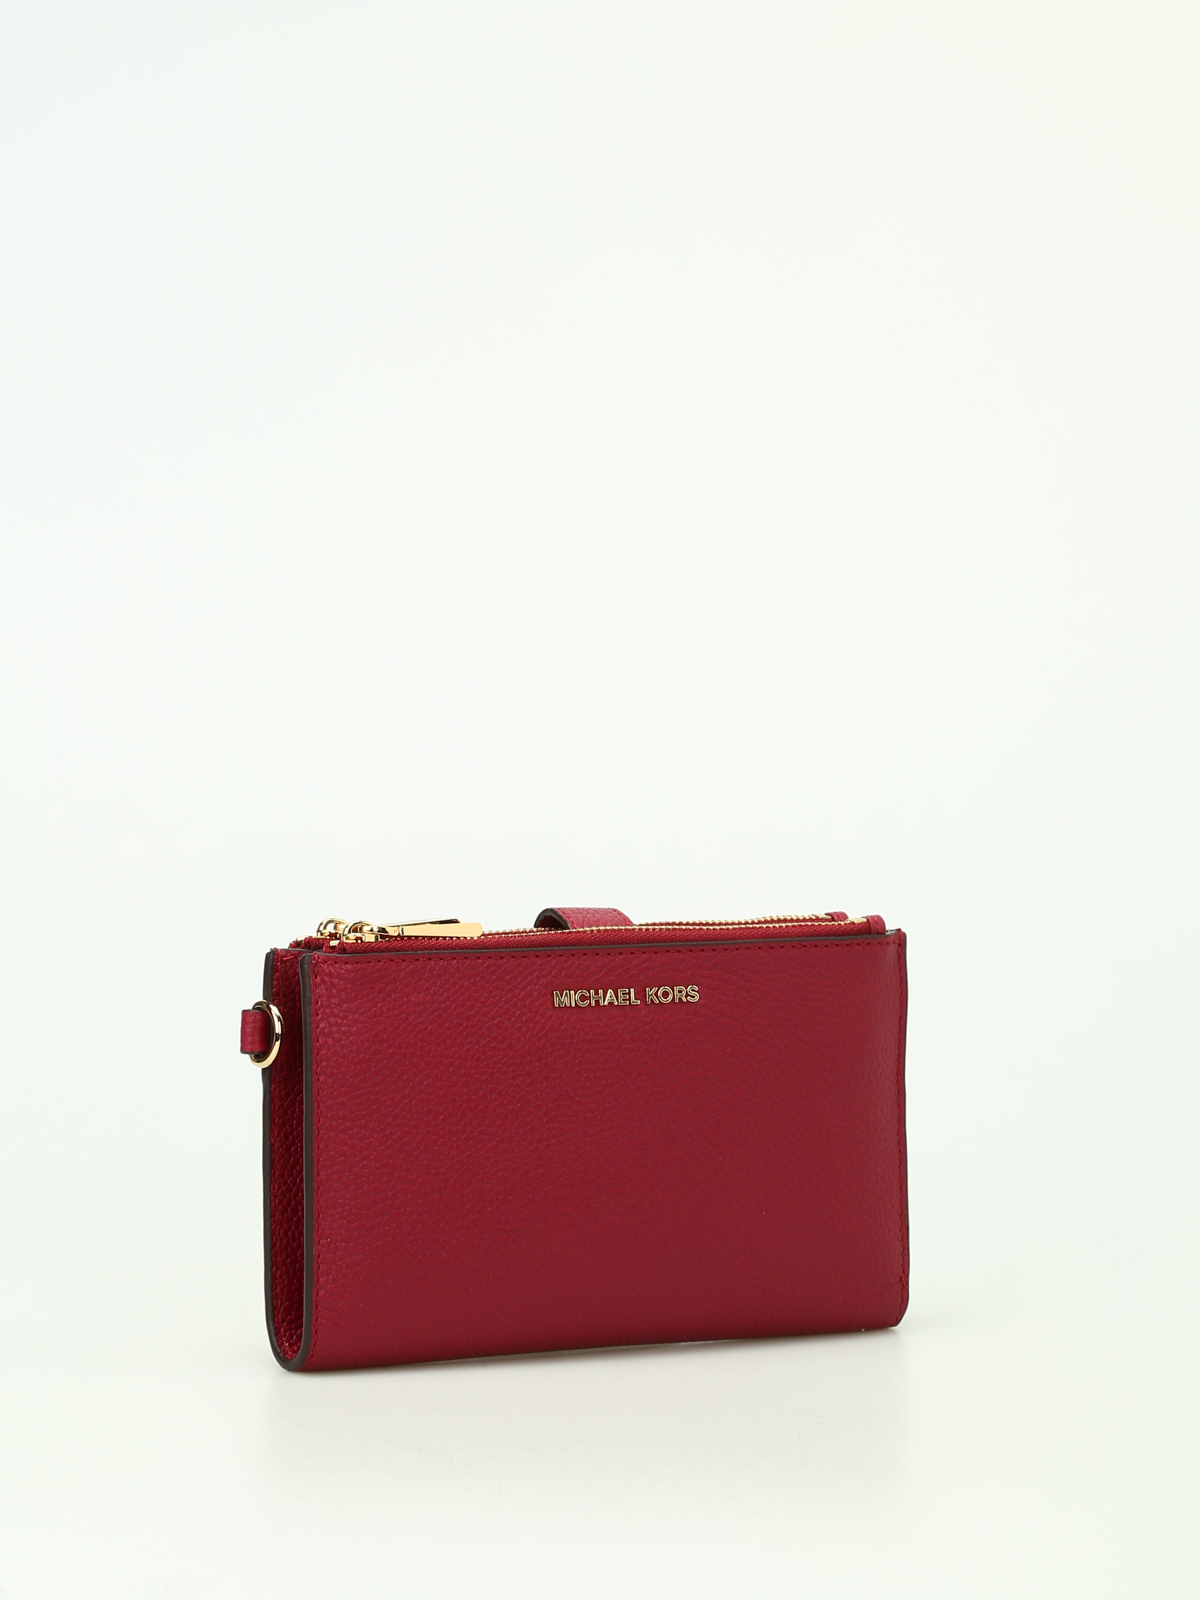 Wallets & purses Michael Kors - Adele mulberry double zip wallet -  32T7GAFW4L666